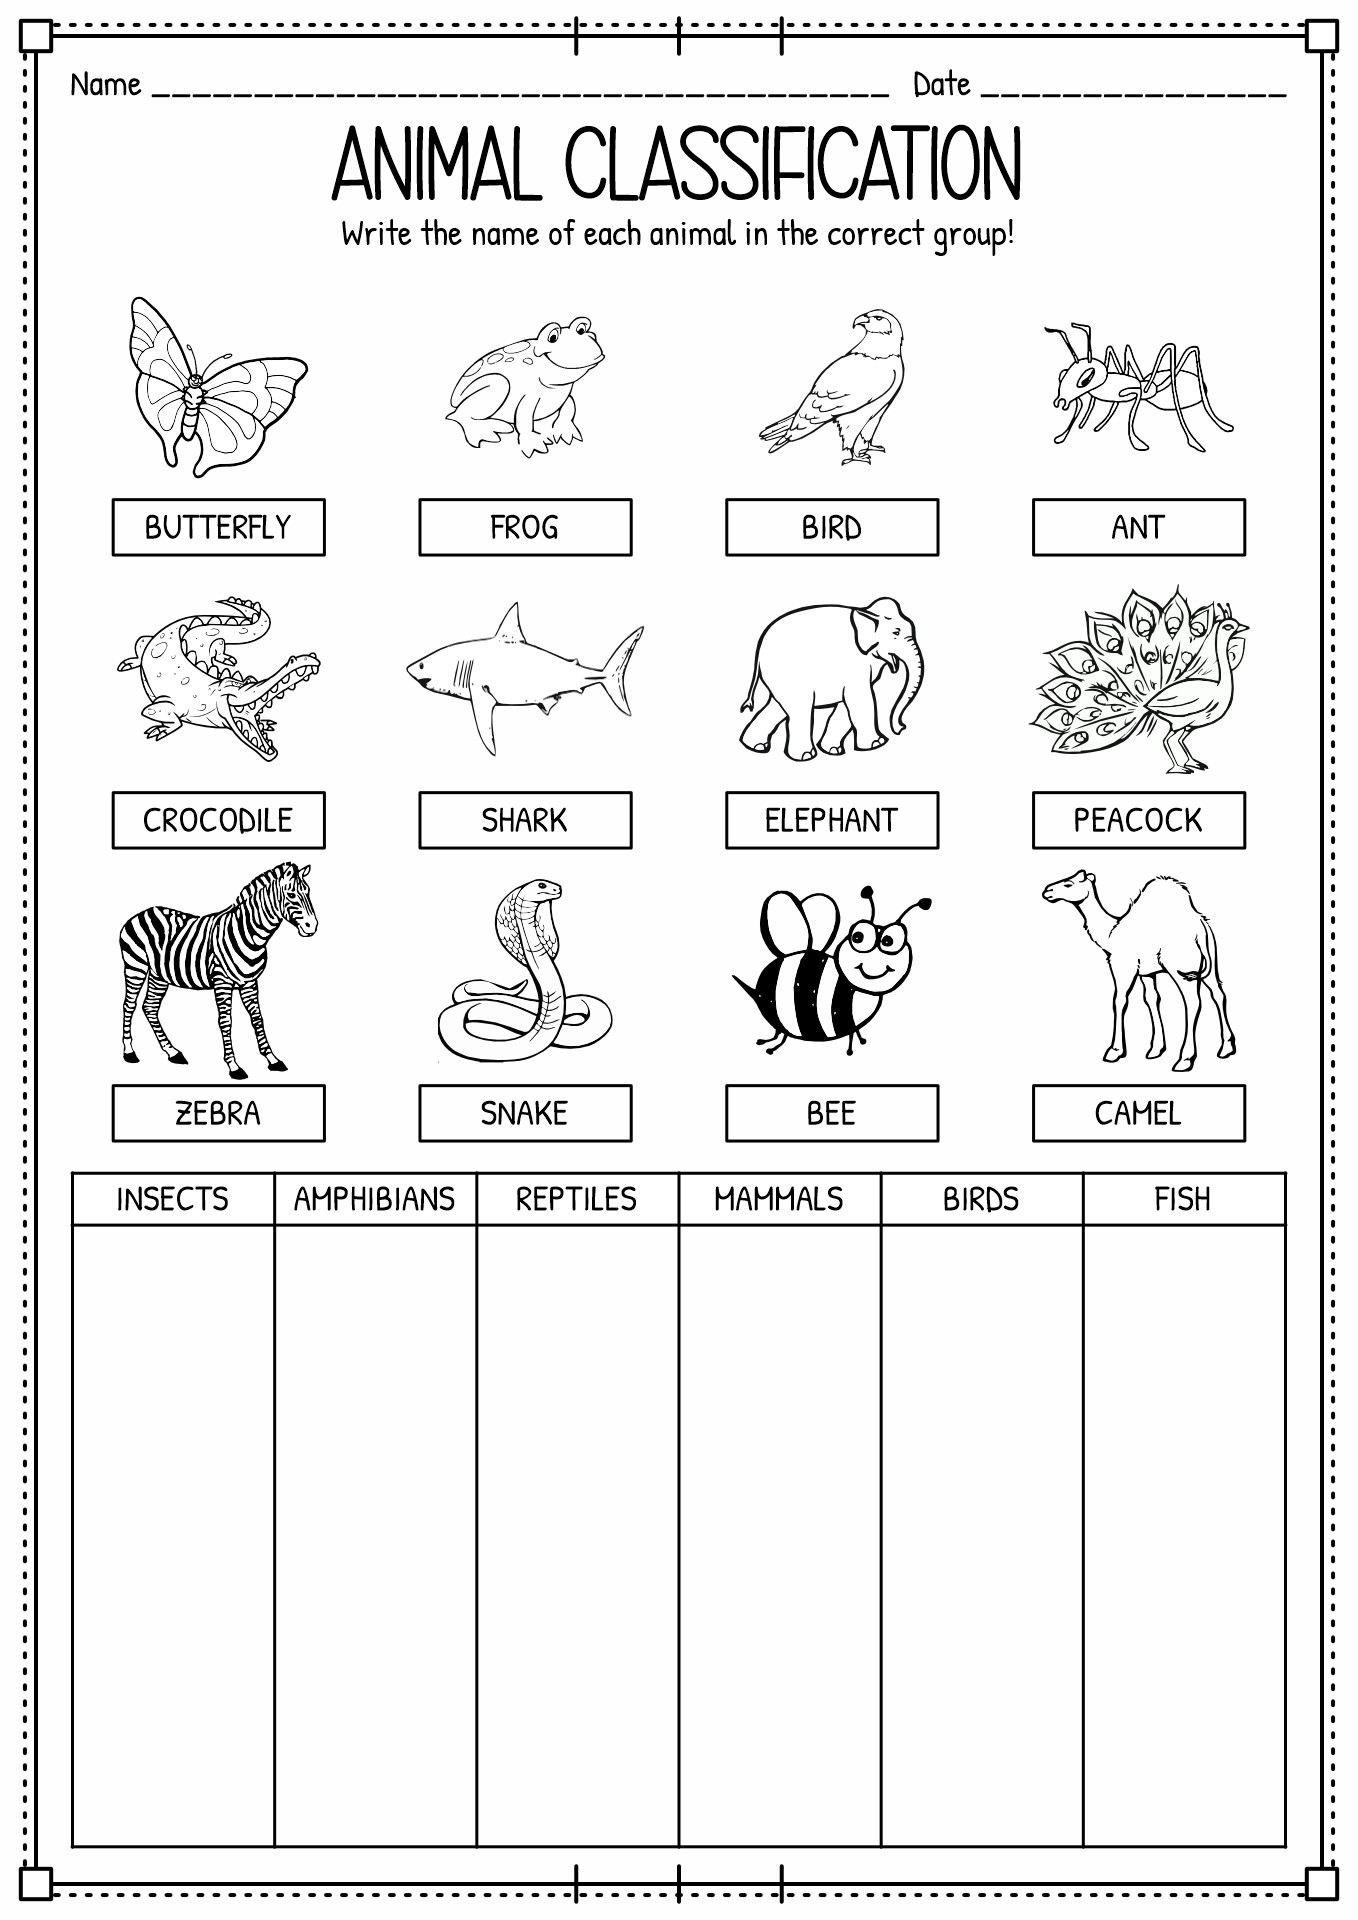 15 Best Images of Classifying Animals Worksheets Preschool